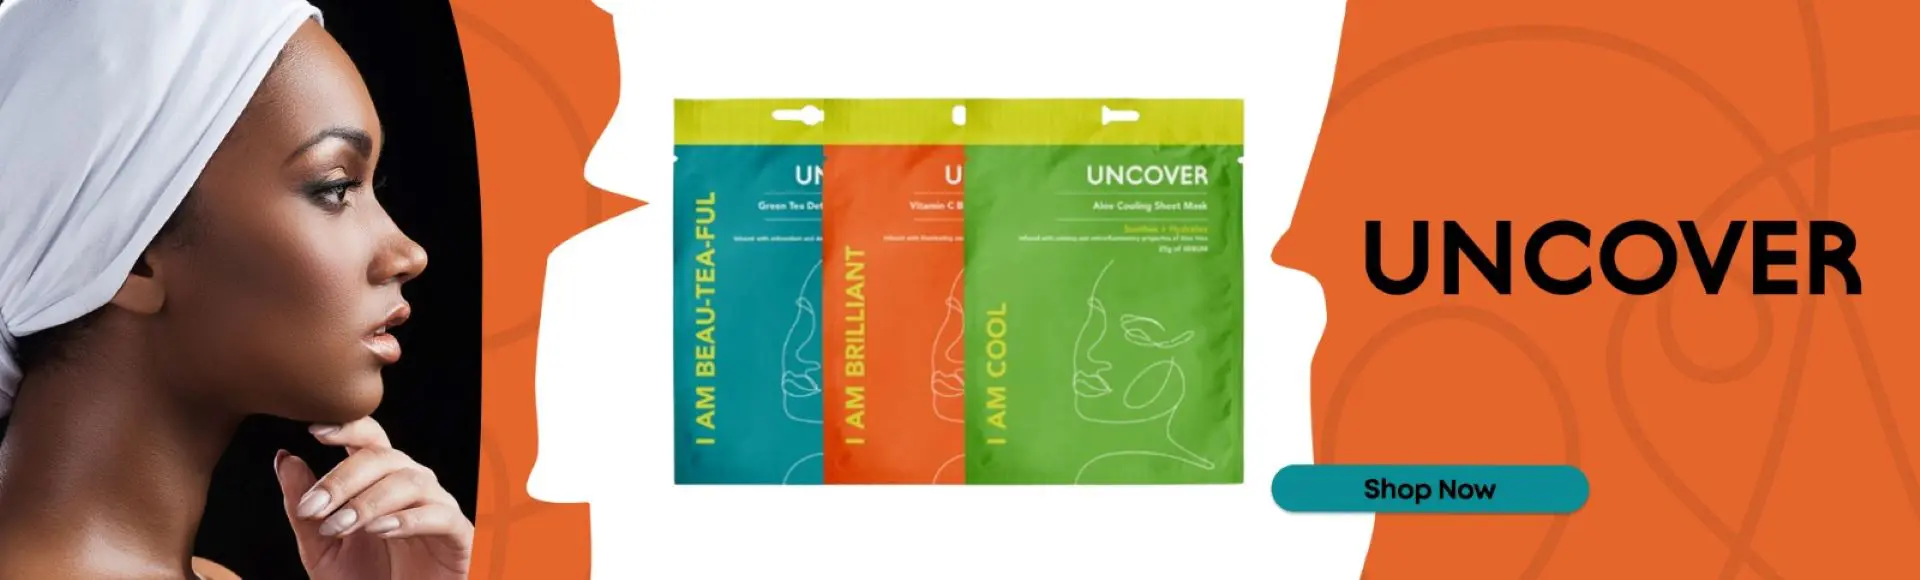 Uncover Essentials Kit (3 step routine: cleanser 120ml, moisturizer 100ml, sunscreen 80ml)